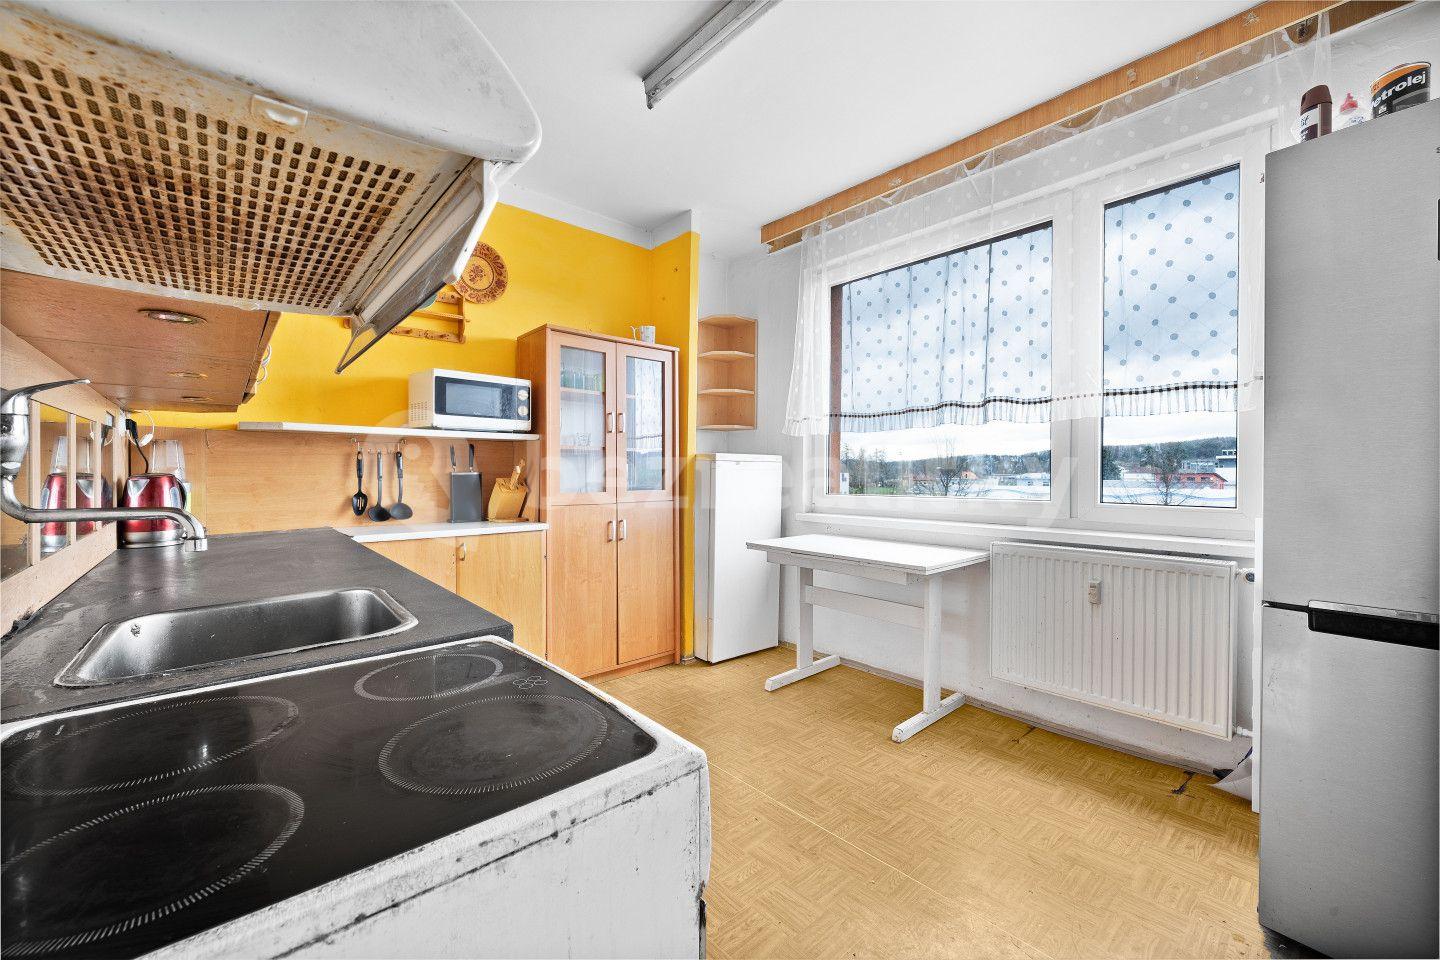 5 bedroom flat for sale, 85 m², V Aleji, Letohrad, Pardubický Region